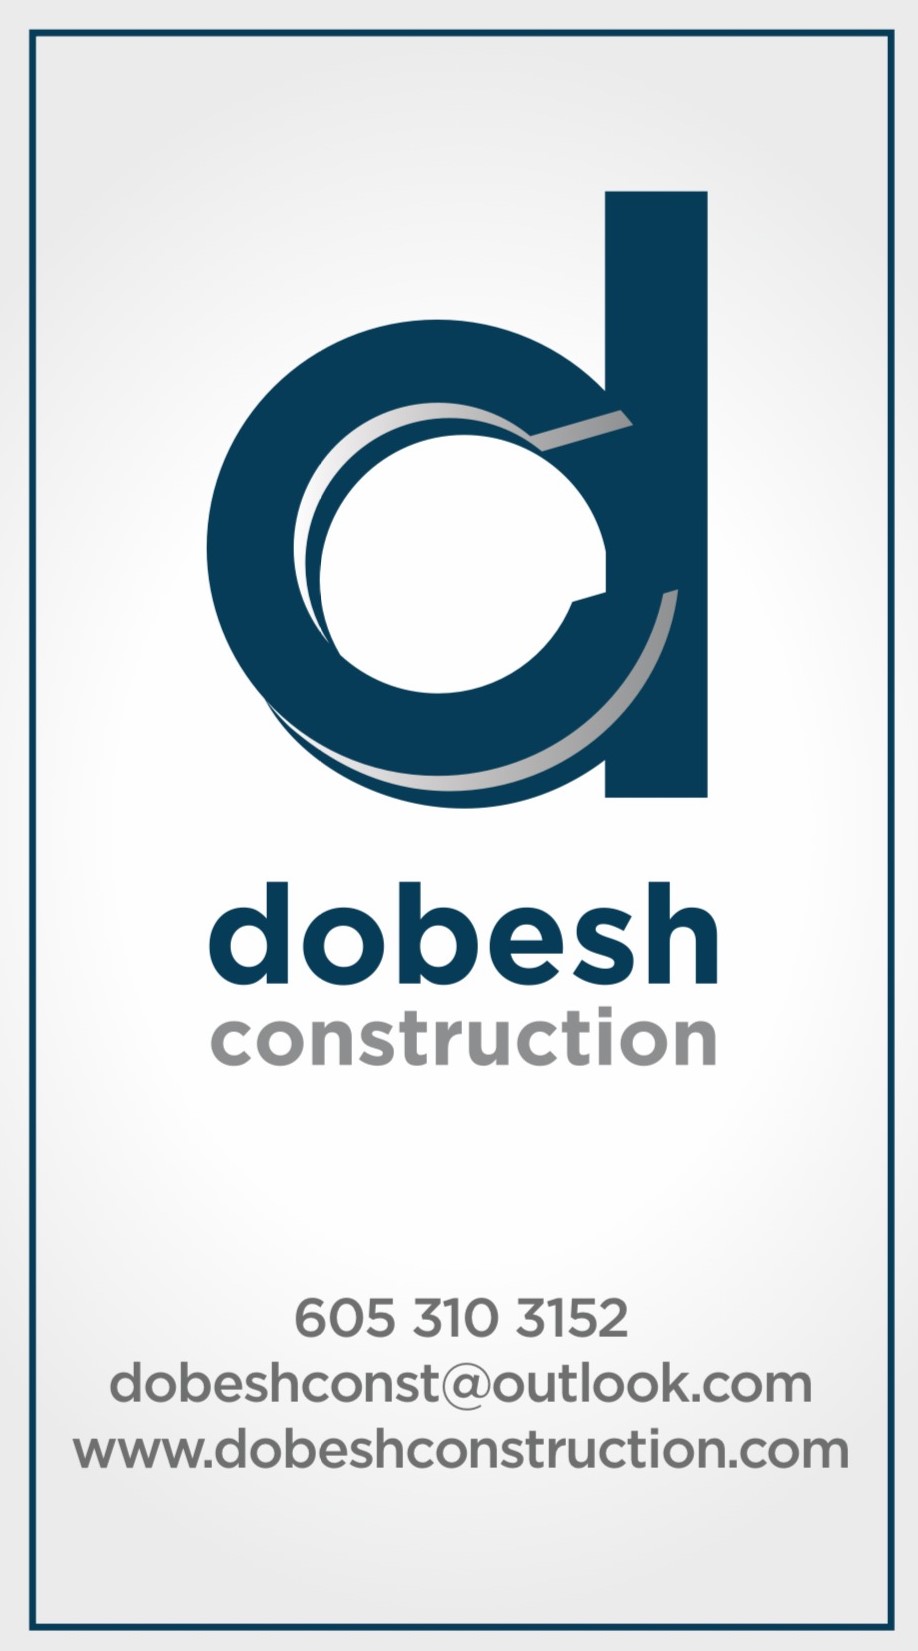 Dobesh Construction LLC company logo